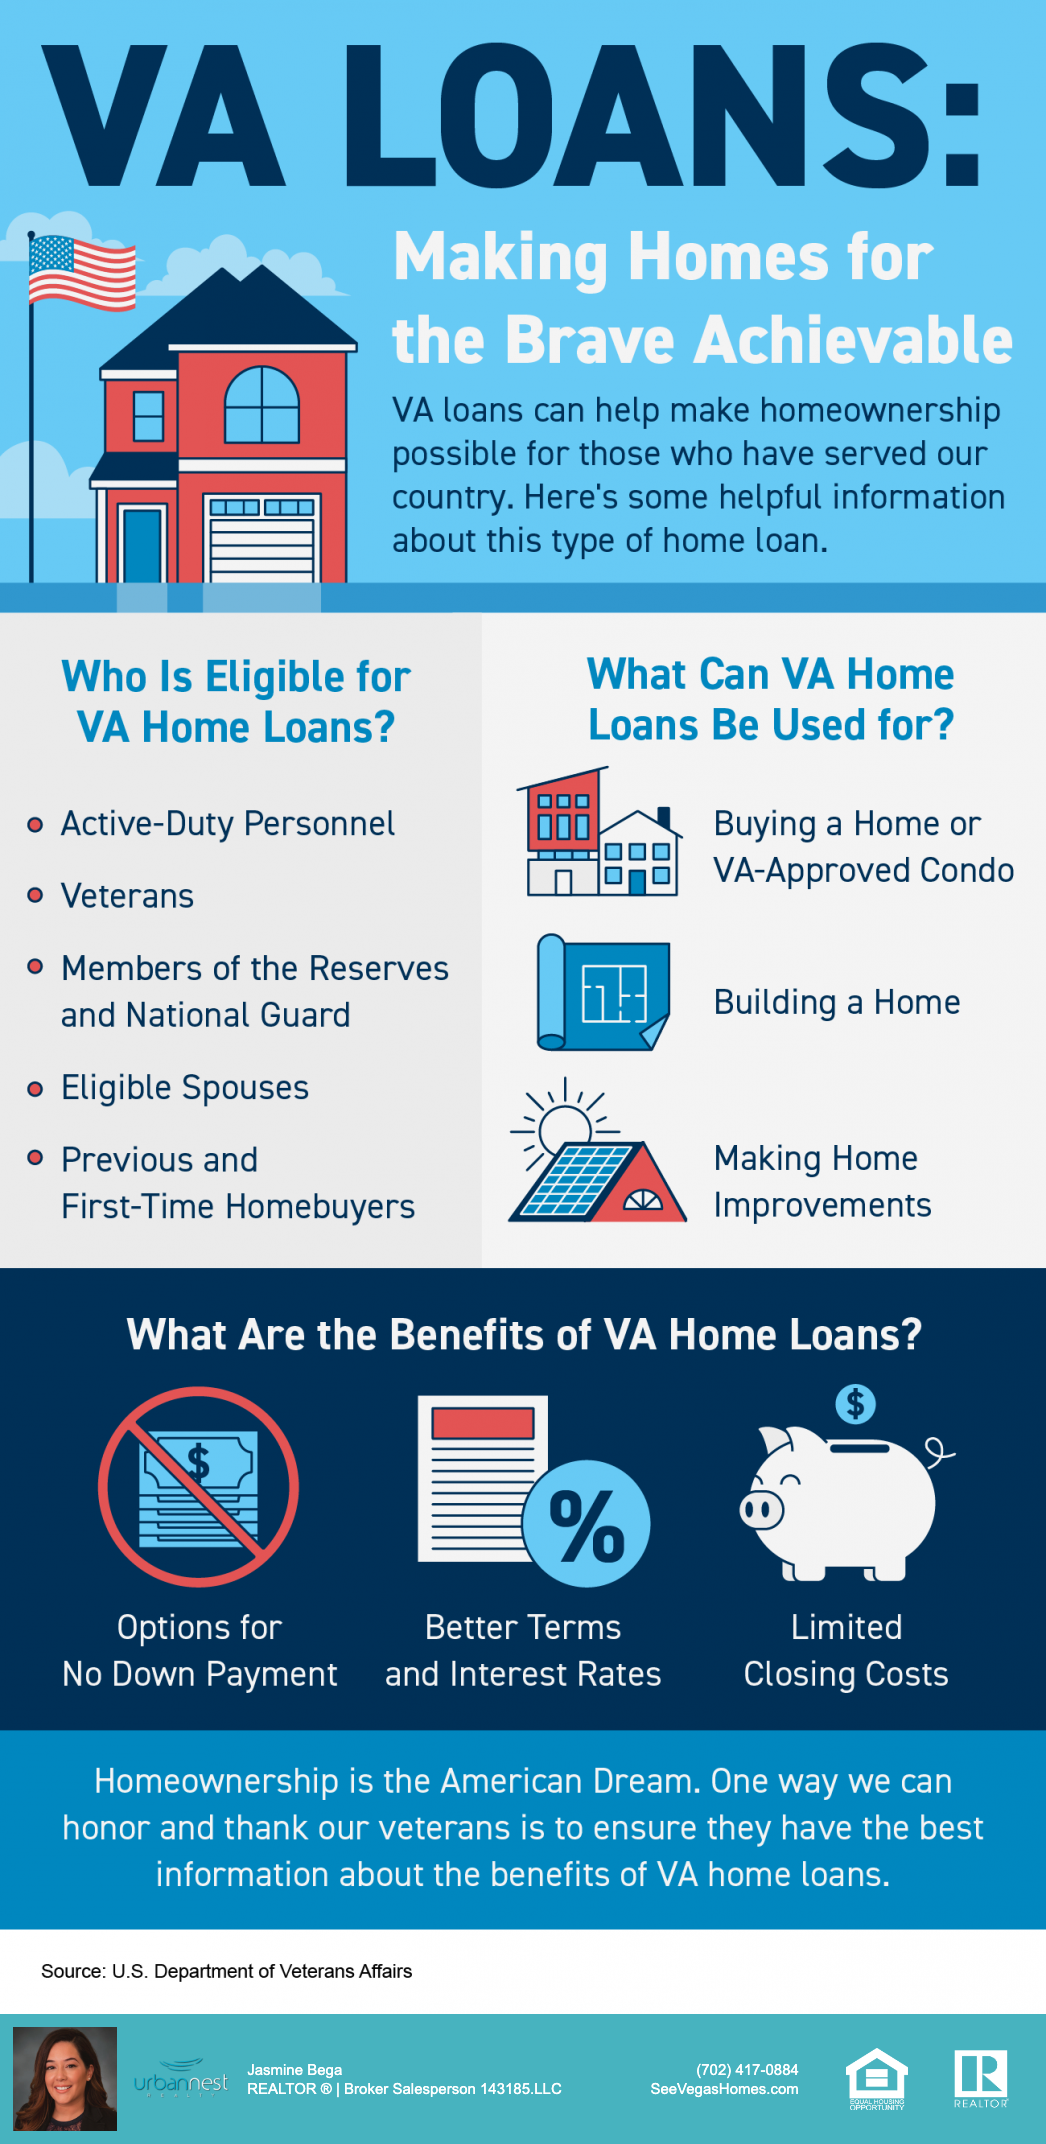 VA_Loans_Making_Homes_for_the_Brave_Achievable_seevegashomes